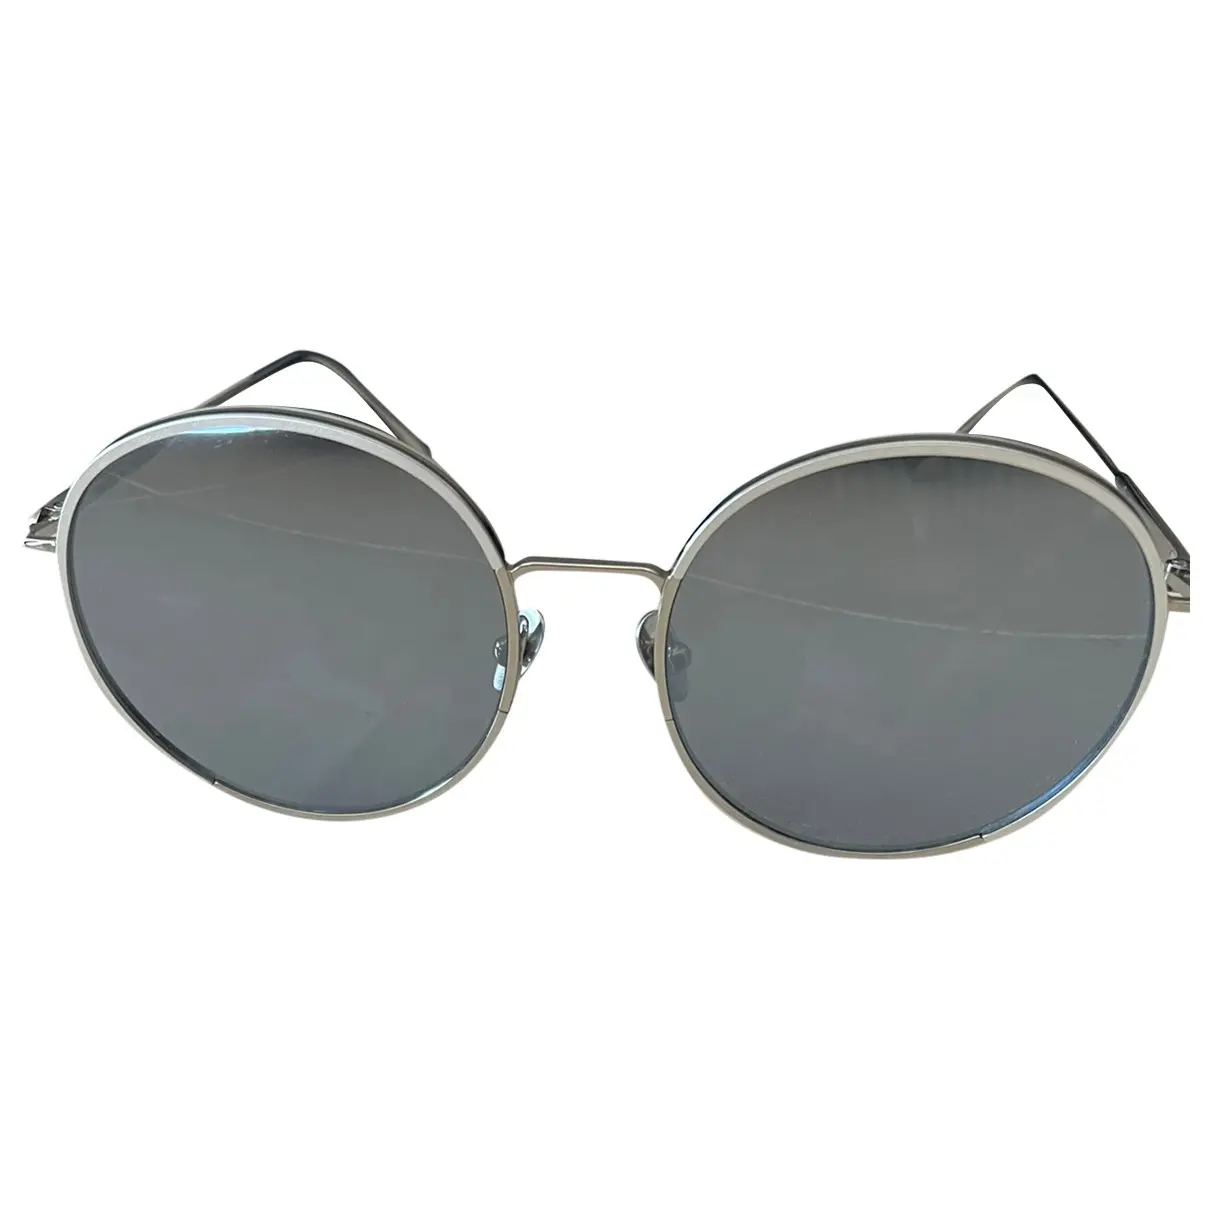 Oversized sunglasses Projekt Produkt